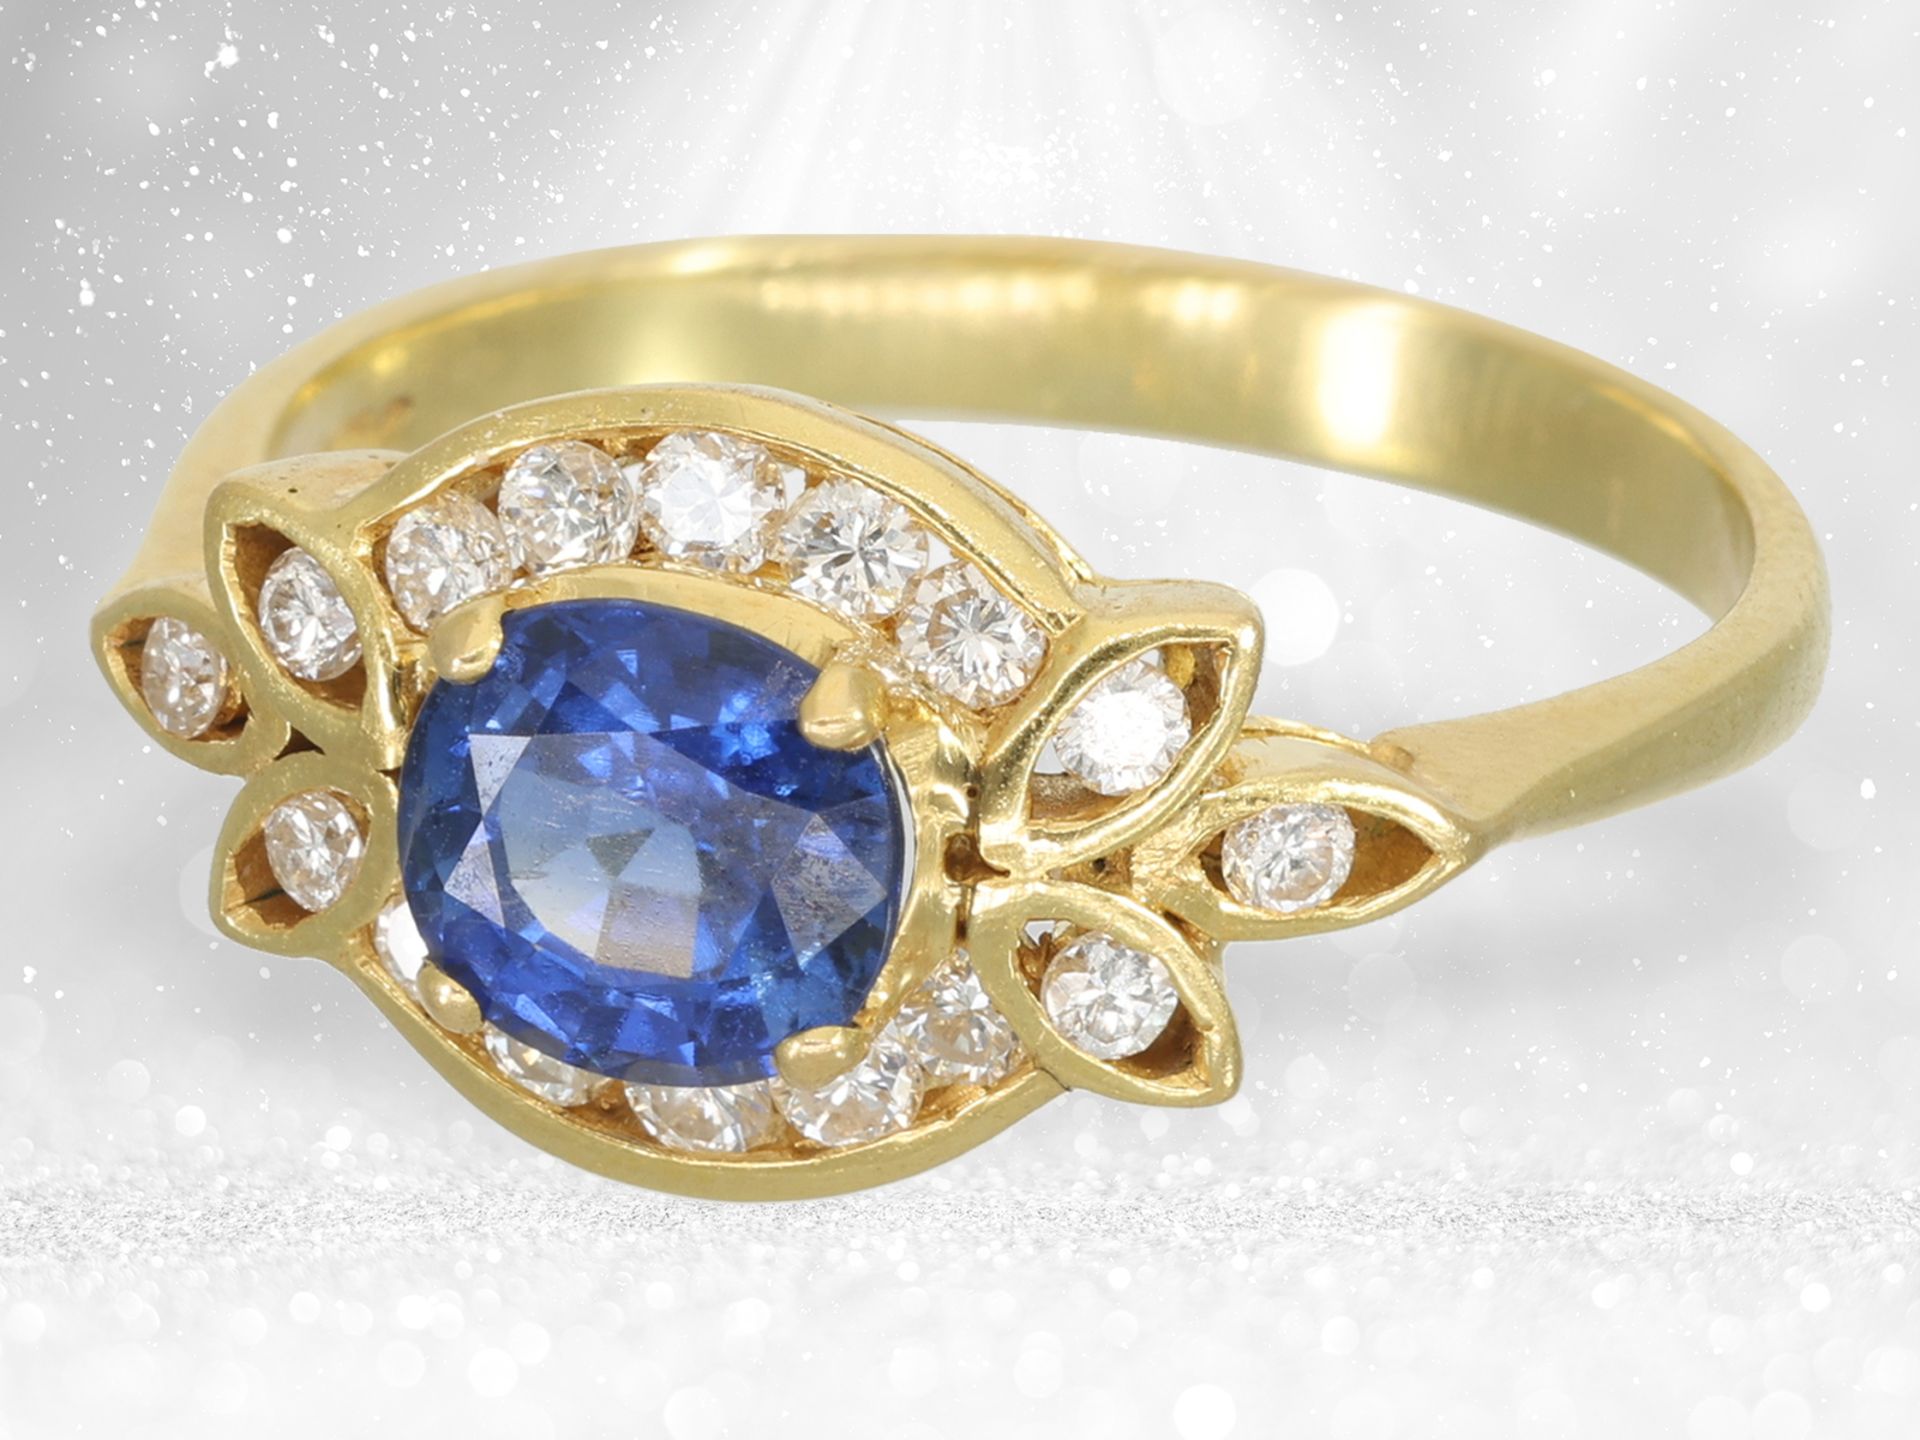 Filigree sapphire/brilliant-cut diamond goldsmith's bracelet with matching ring, 18K gold - Image 3 of 4